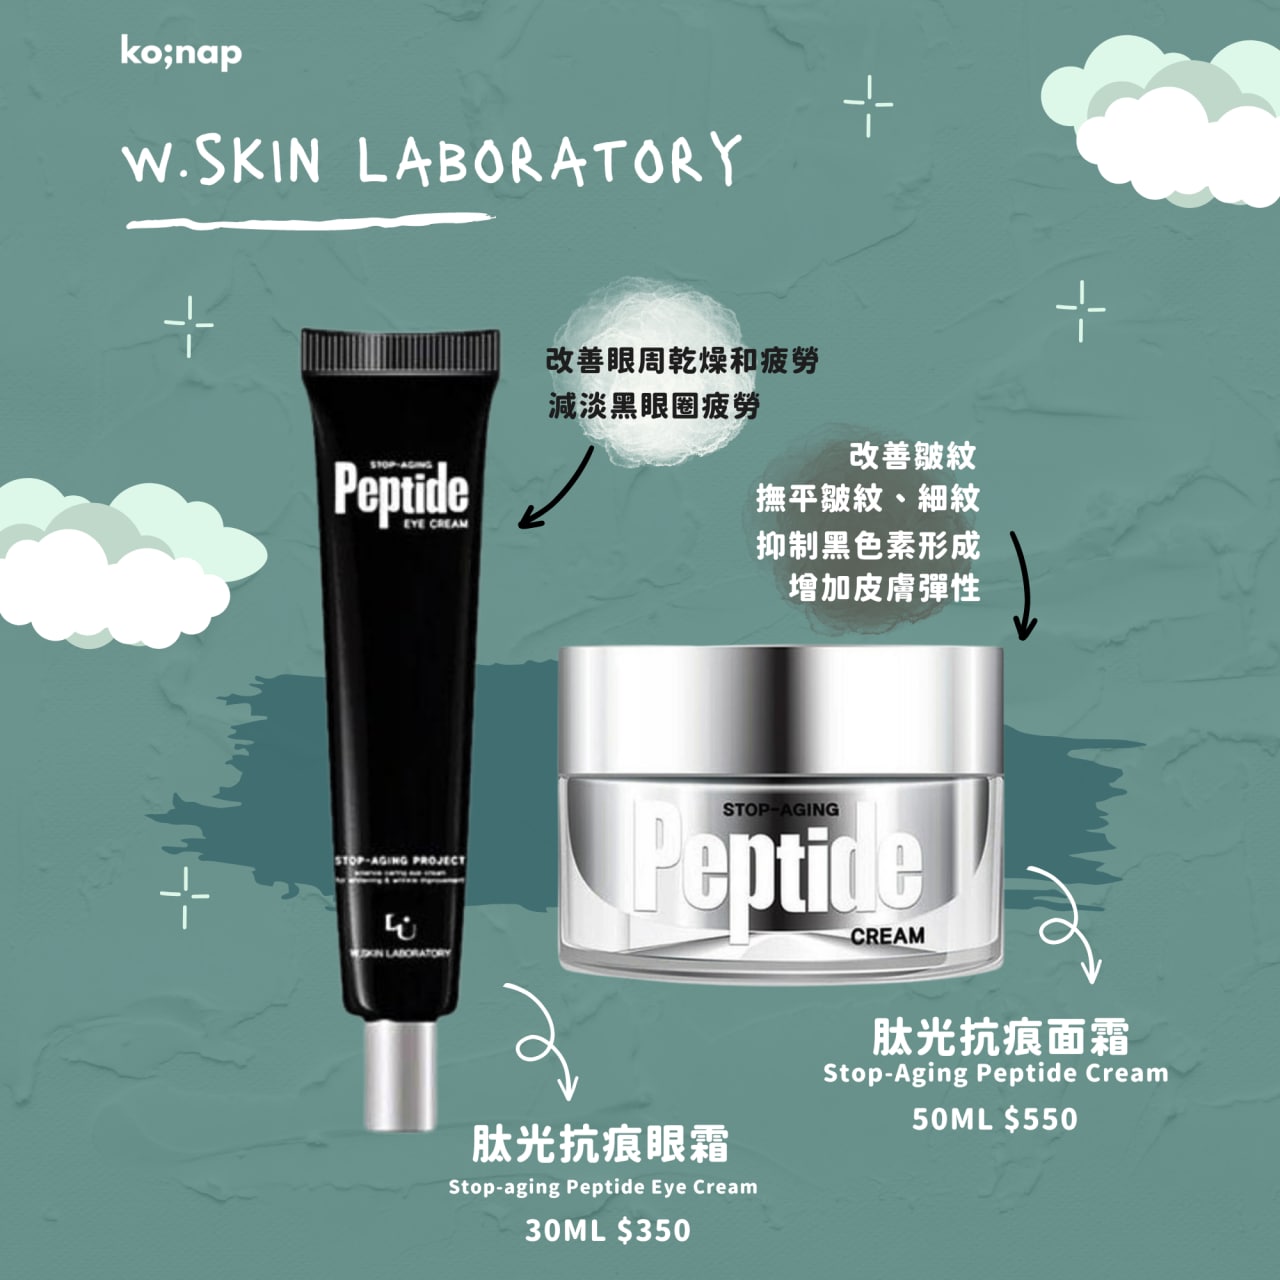 Peptide Illuminating Anti-Wrinkle Face Cream